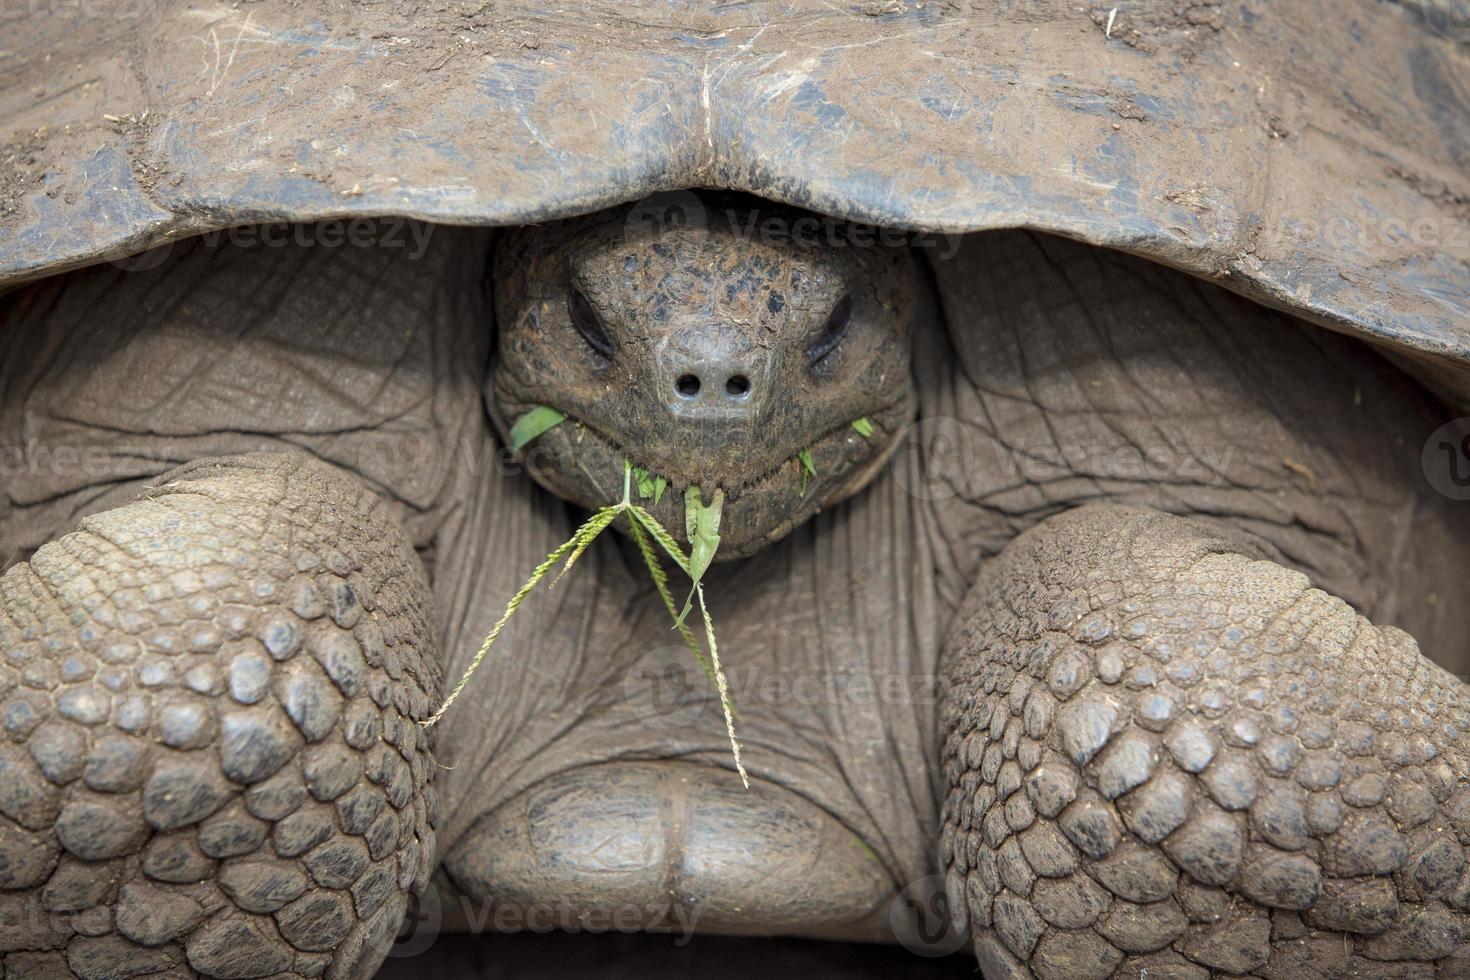 Giant Galapagos land turtle photo